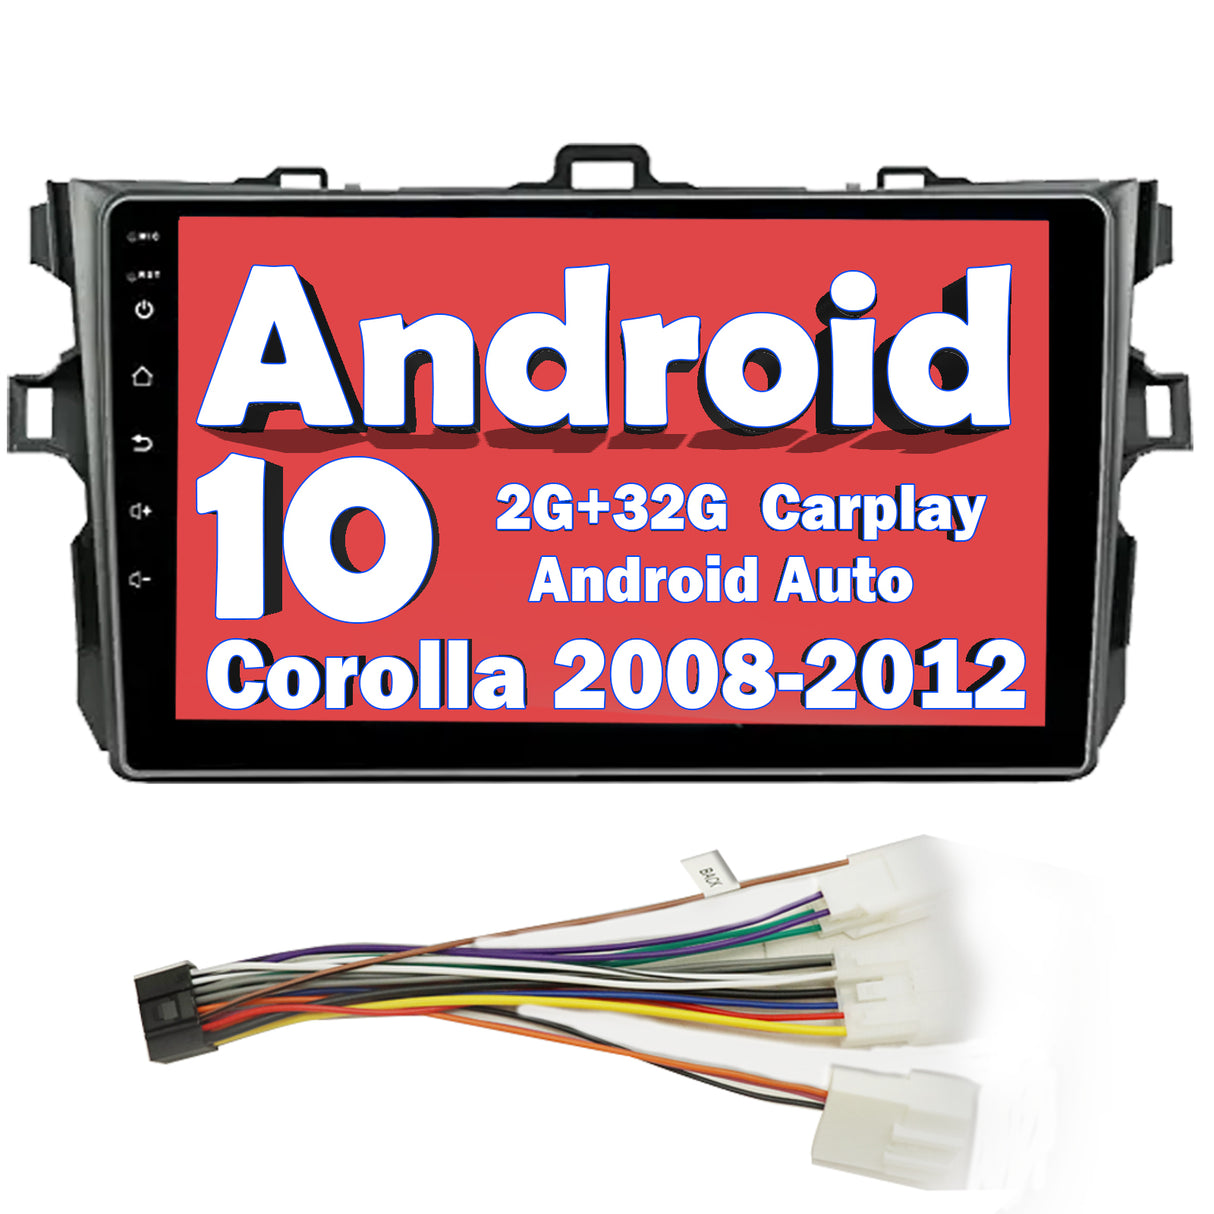 Binize Corolla 2008-2012 with Toyota android auto Carplay